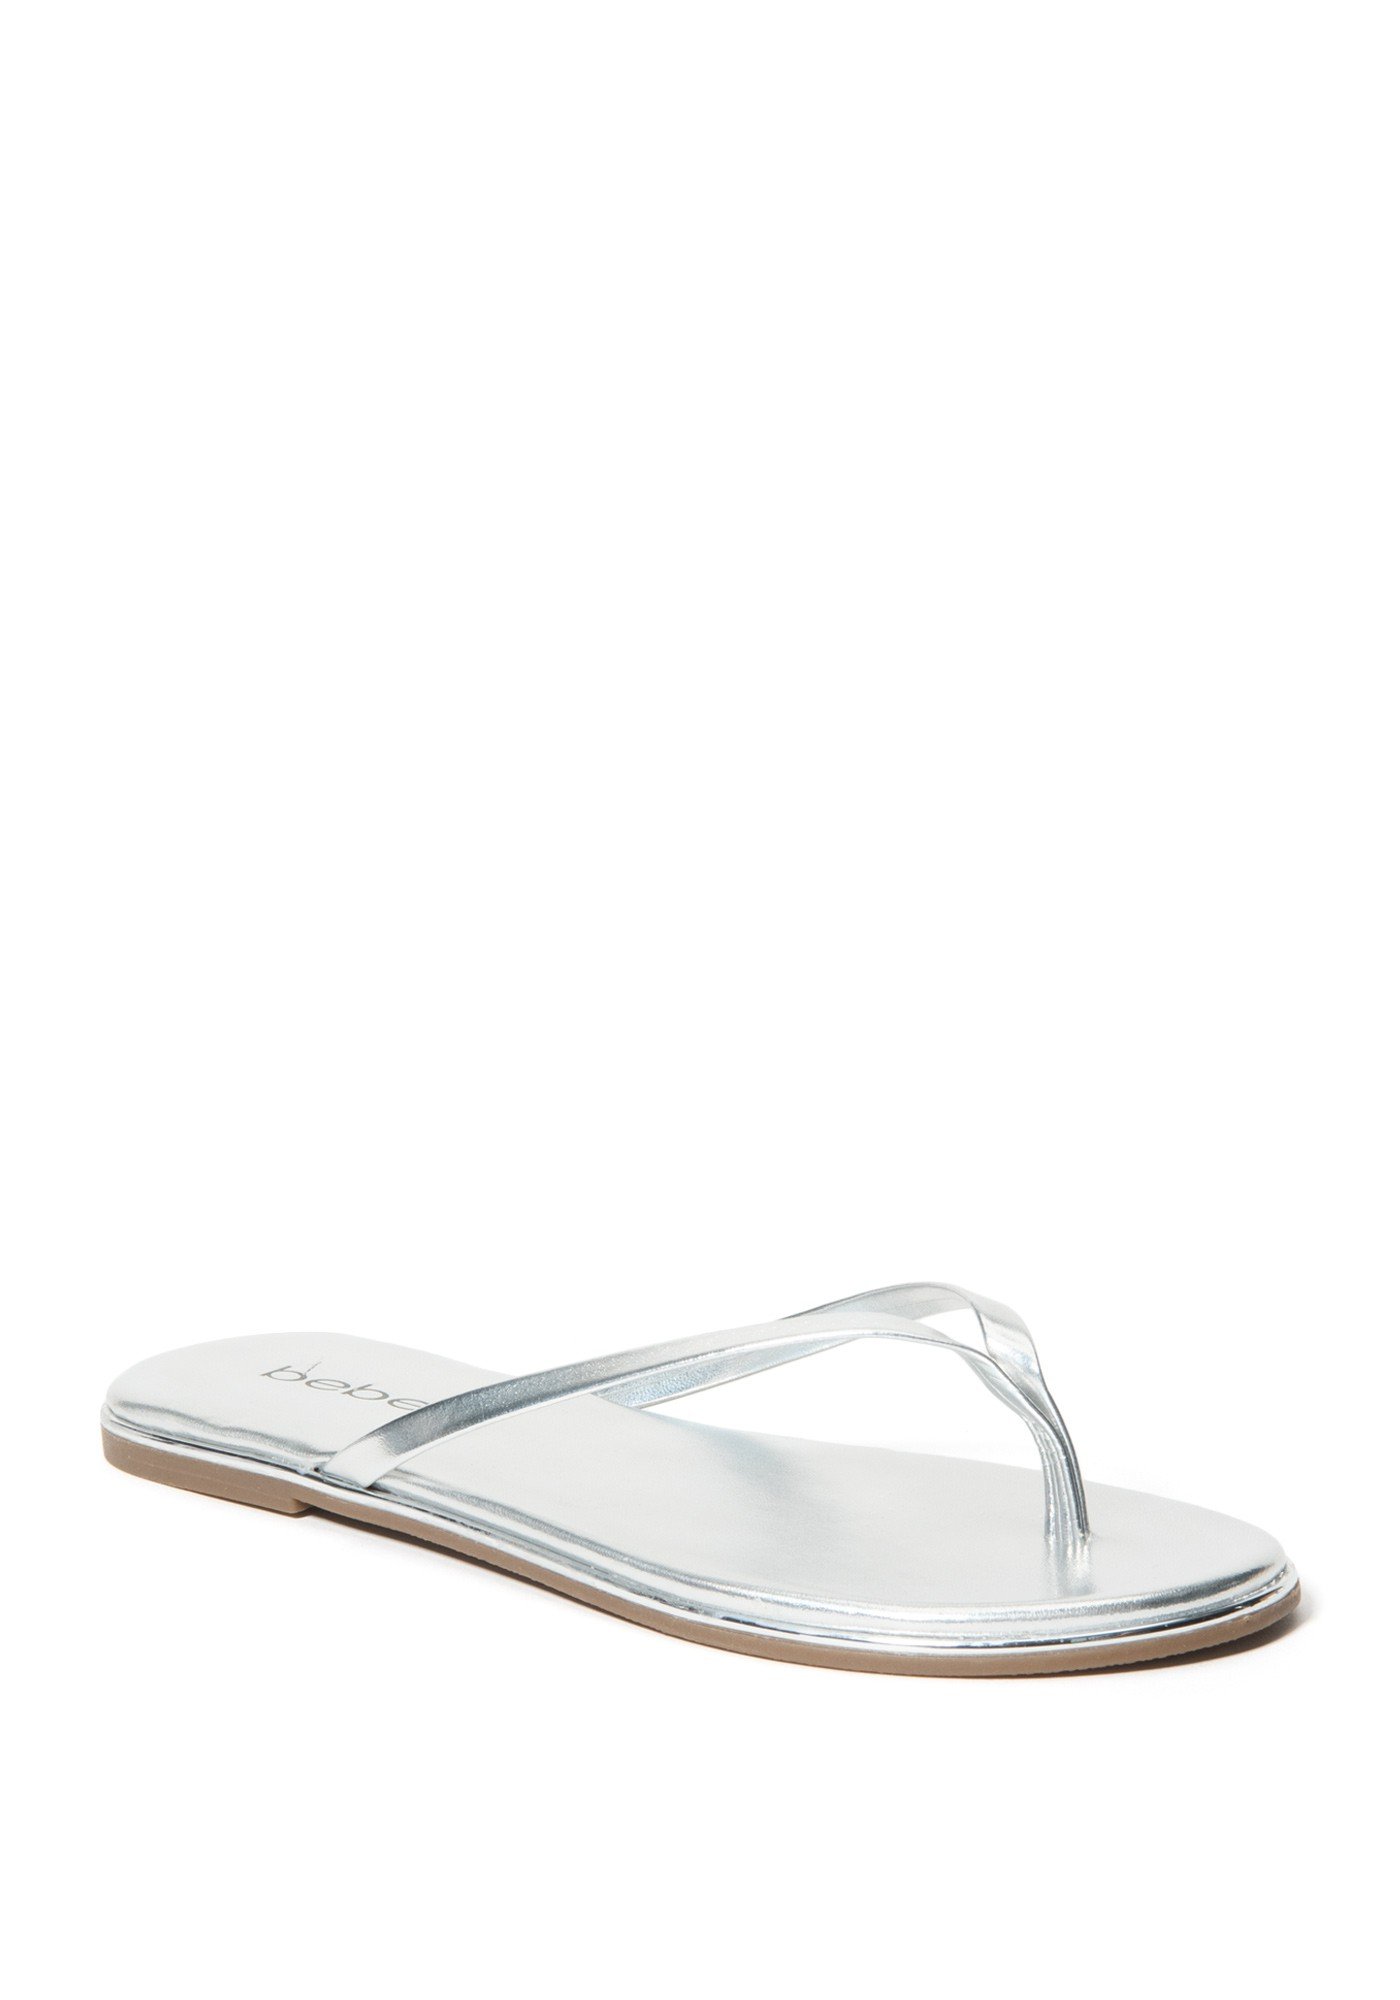 Bebe Women's Ilistra Flip Flops, Size 9.5 in Silver Iridescent Synthetic